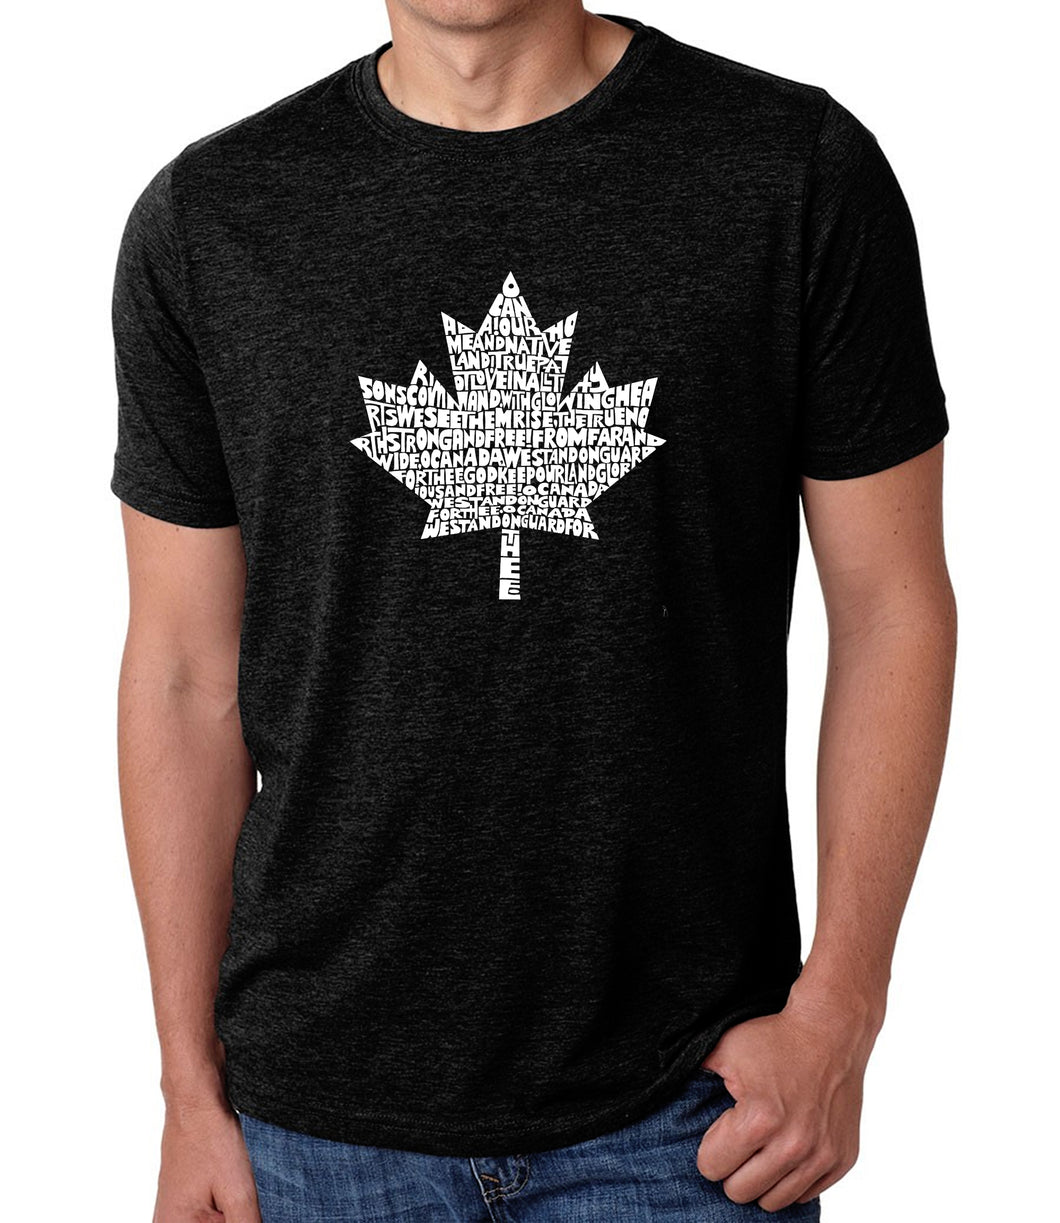 CANADIAN NATIONAL ANTHEM - Men's Premium Blend Word Art T-Shirt